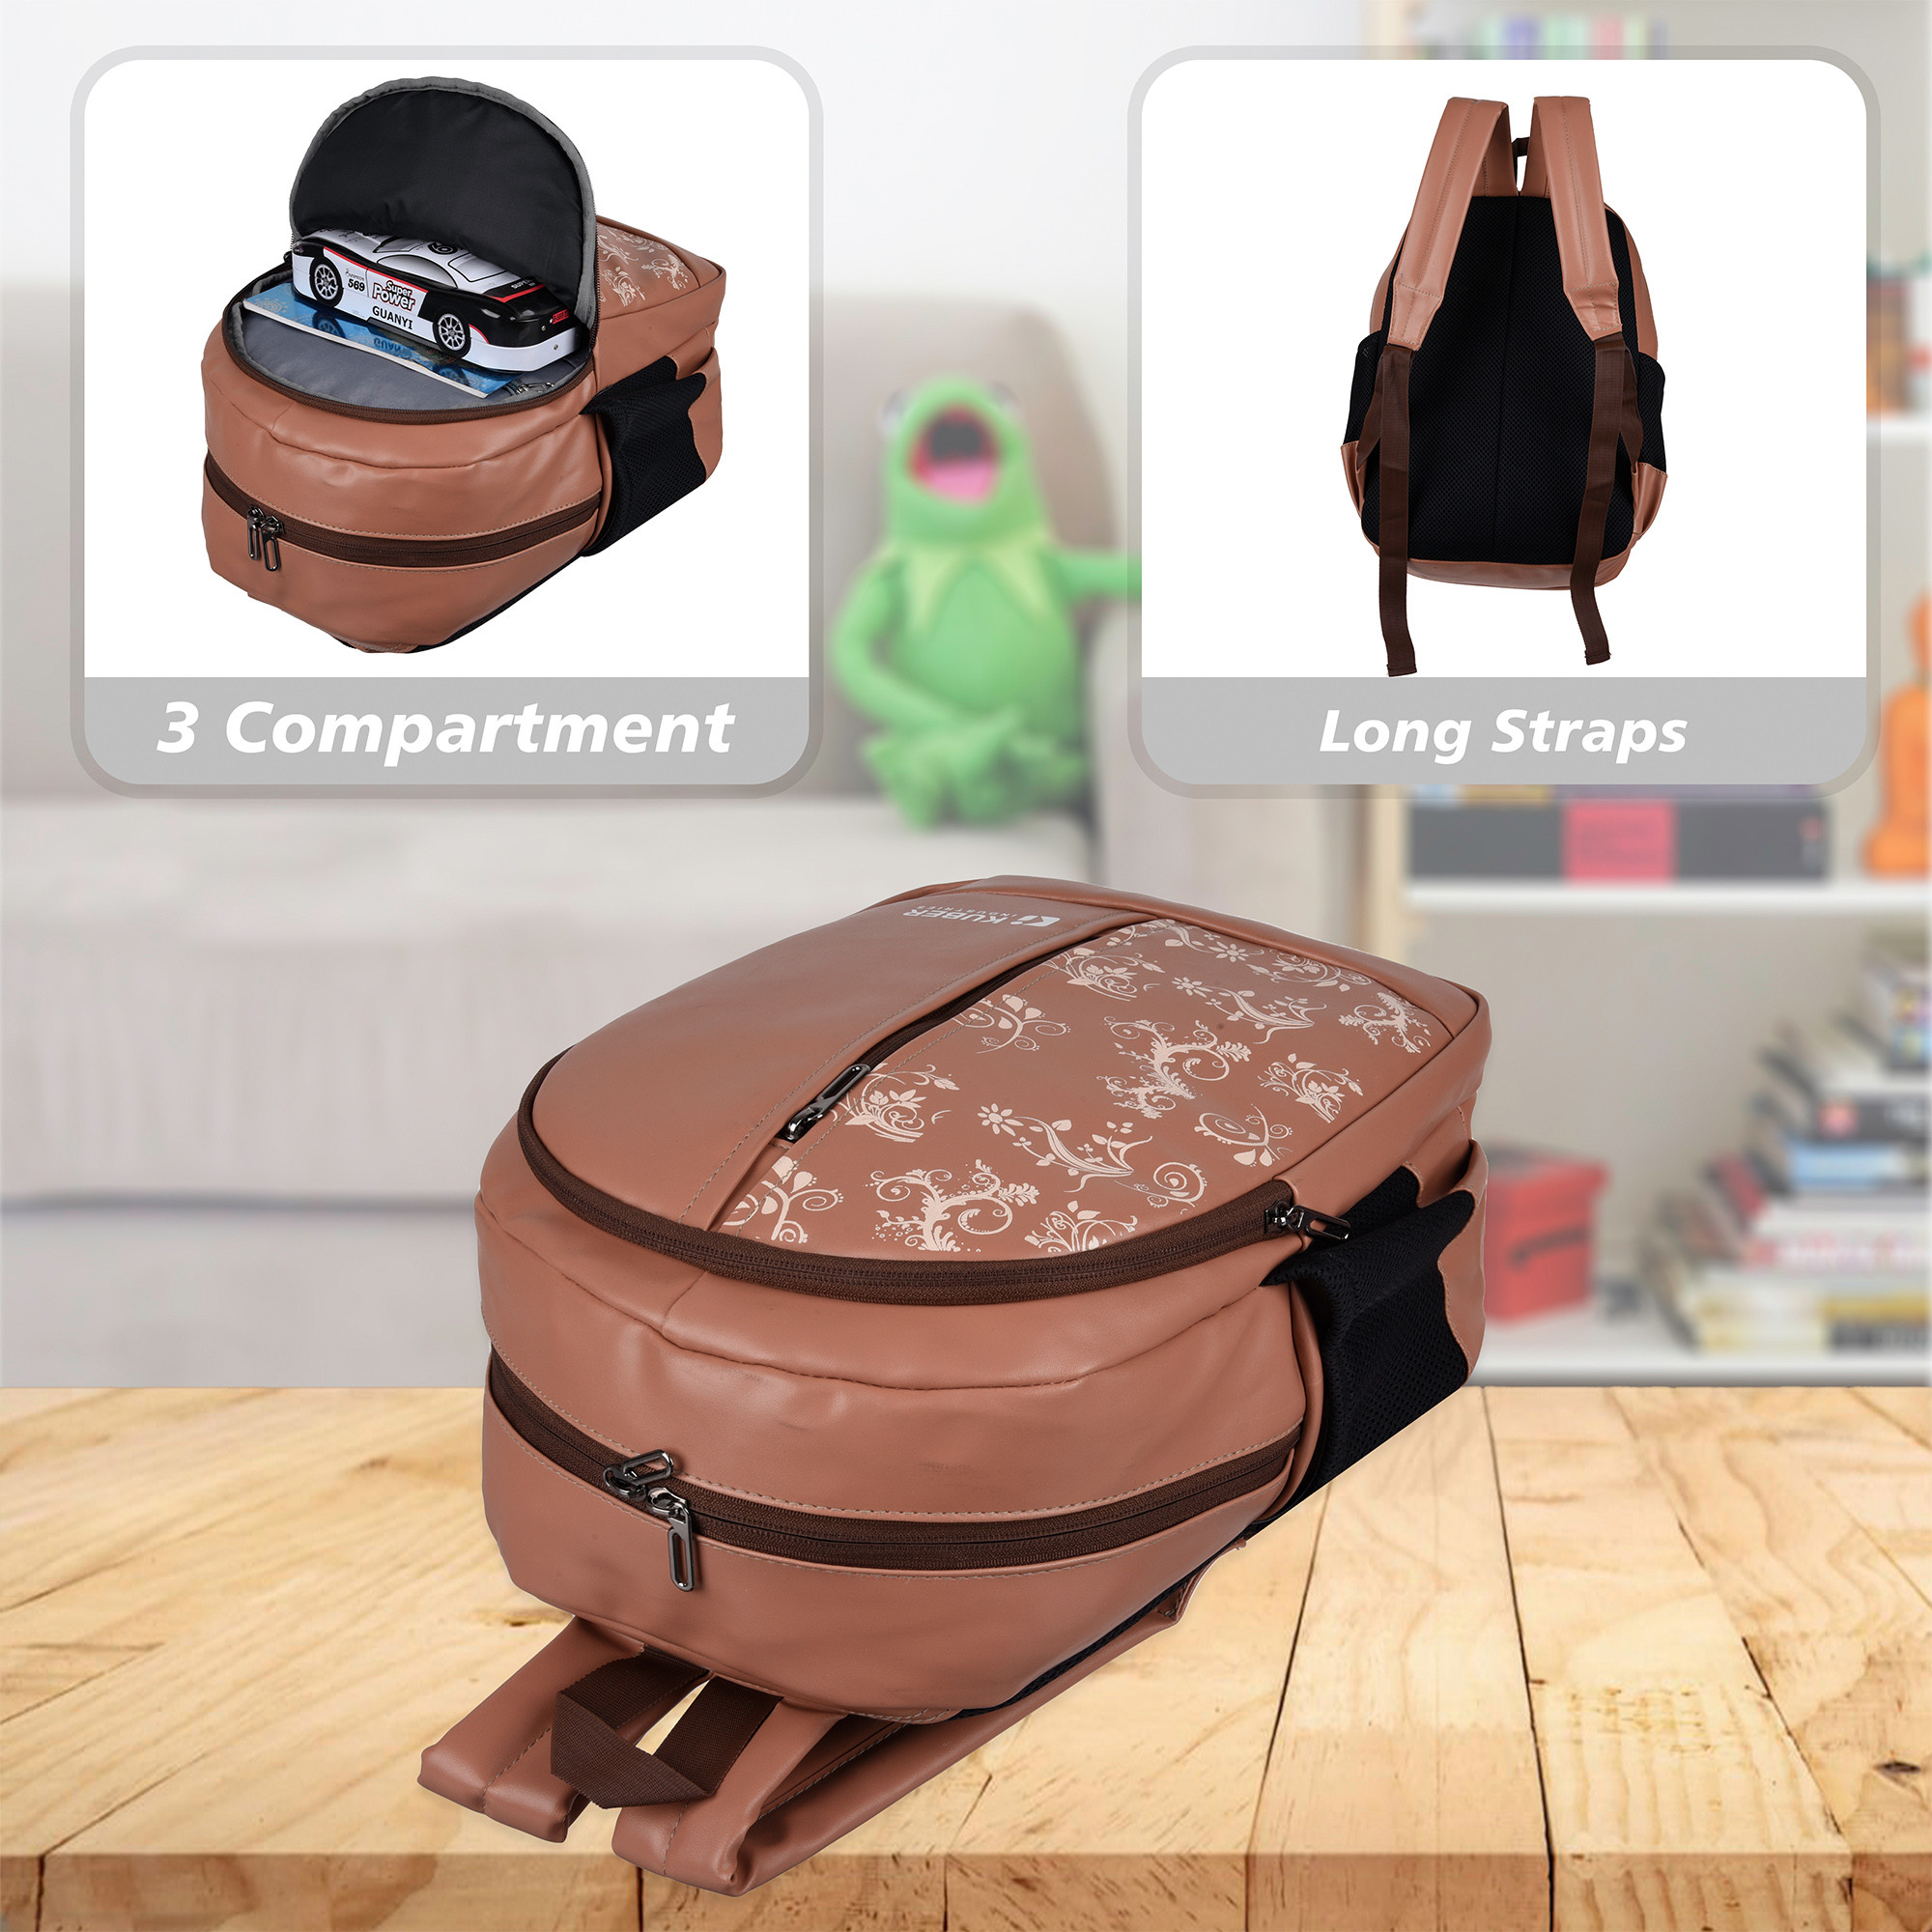 Kuber Industries Backpack | School Backpack for Kids | Collage Backpack | School Bag for Boys & Girls | 3 Compartments Mini Backpack | Half Print School Bag | Beige